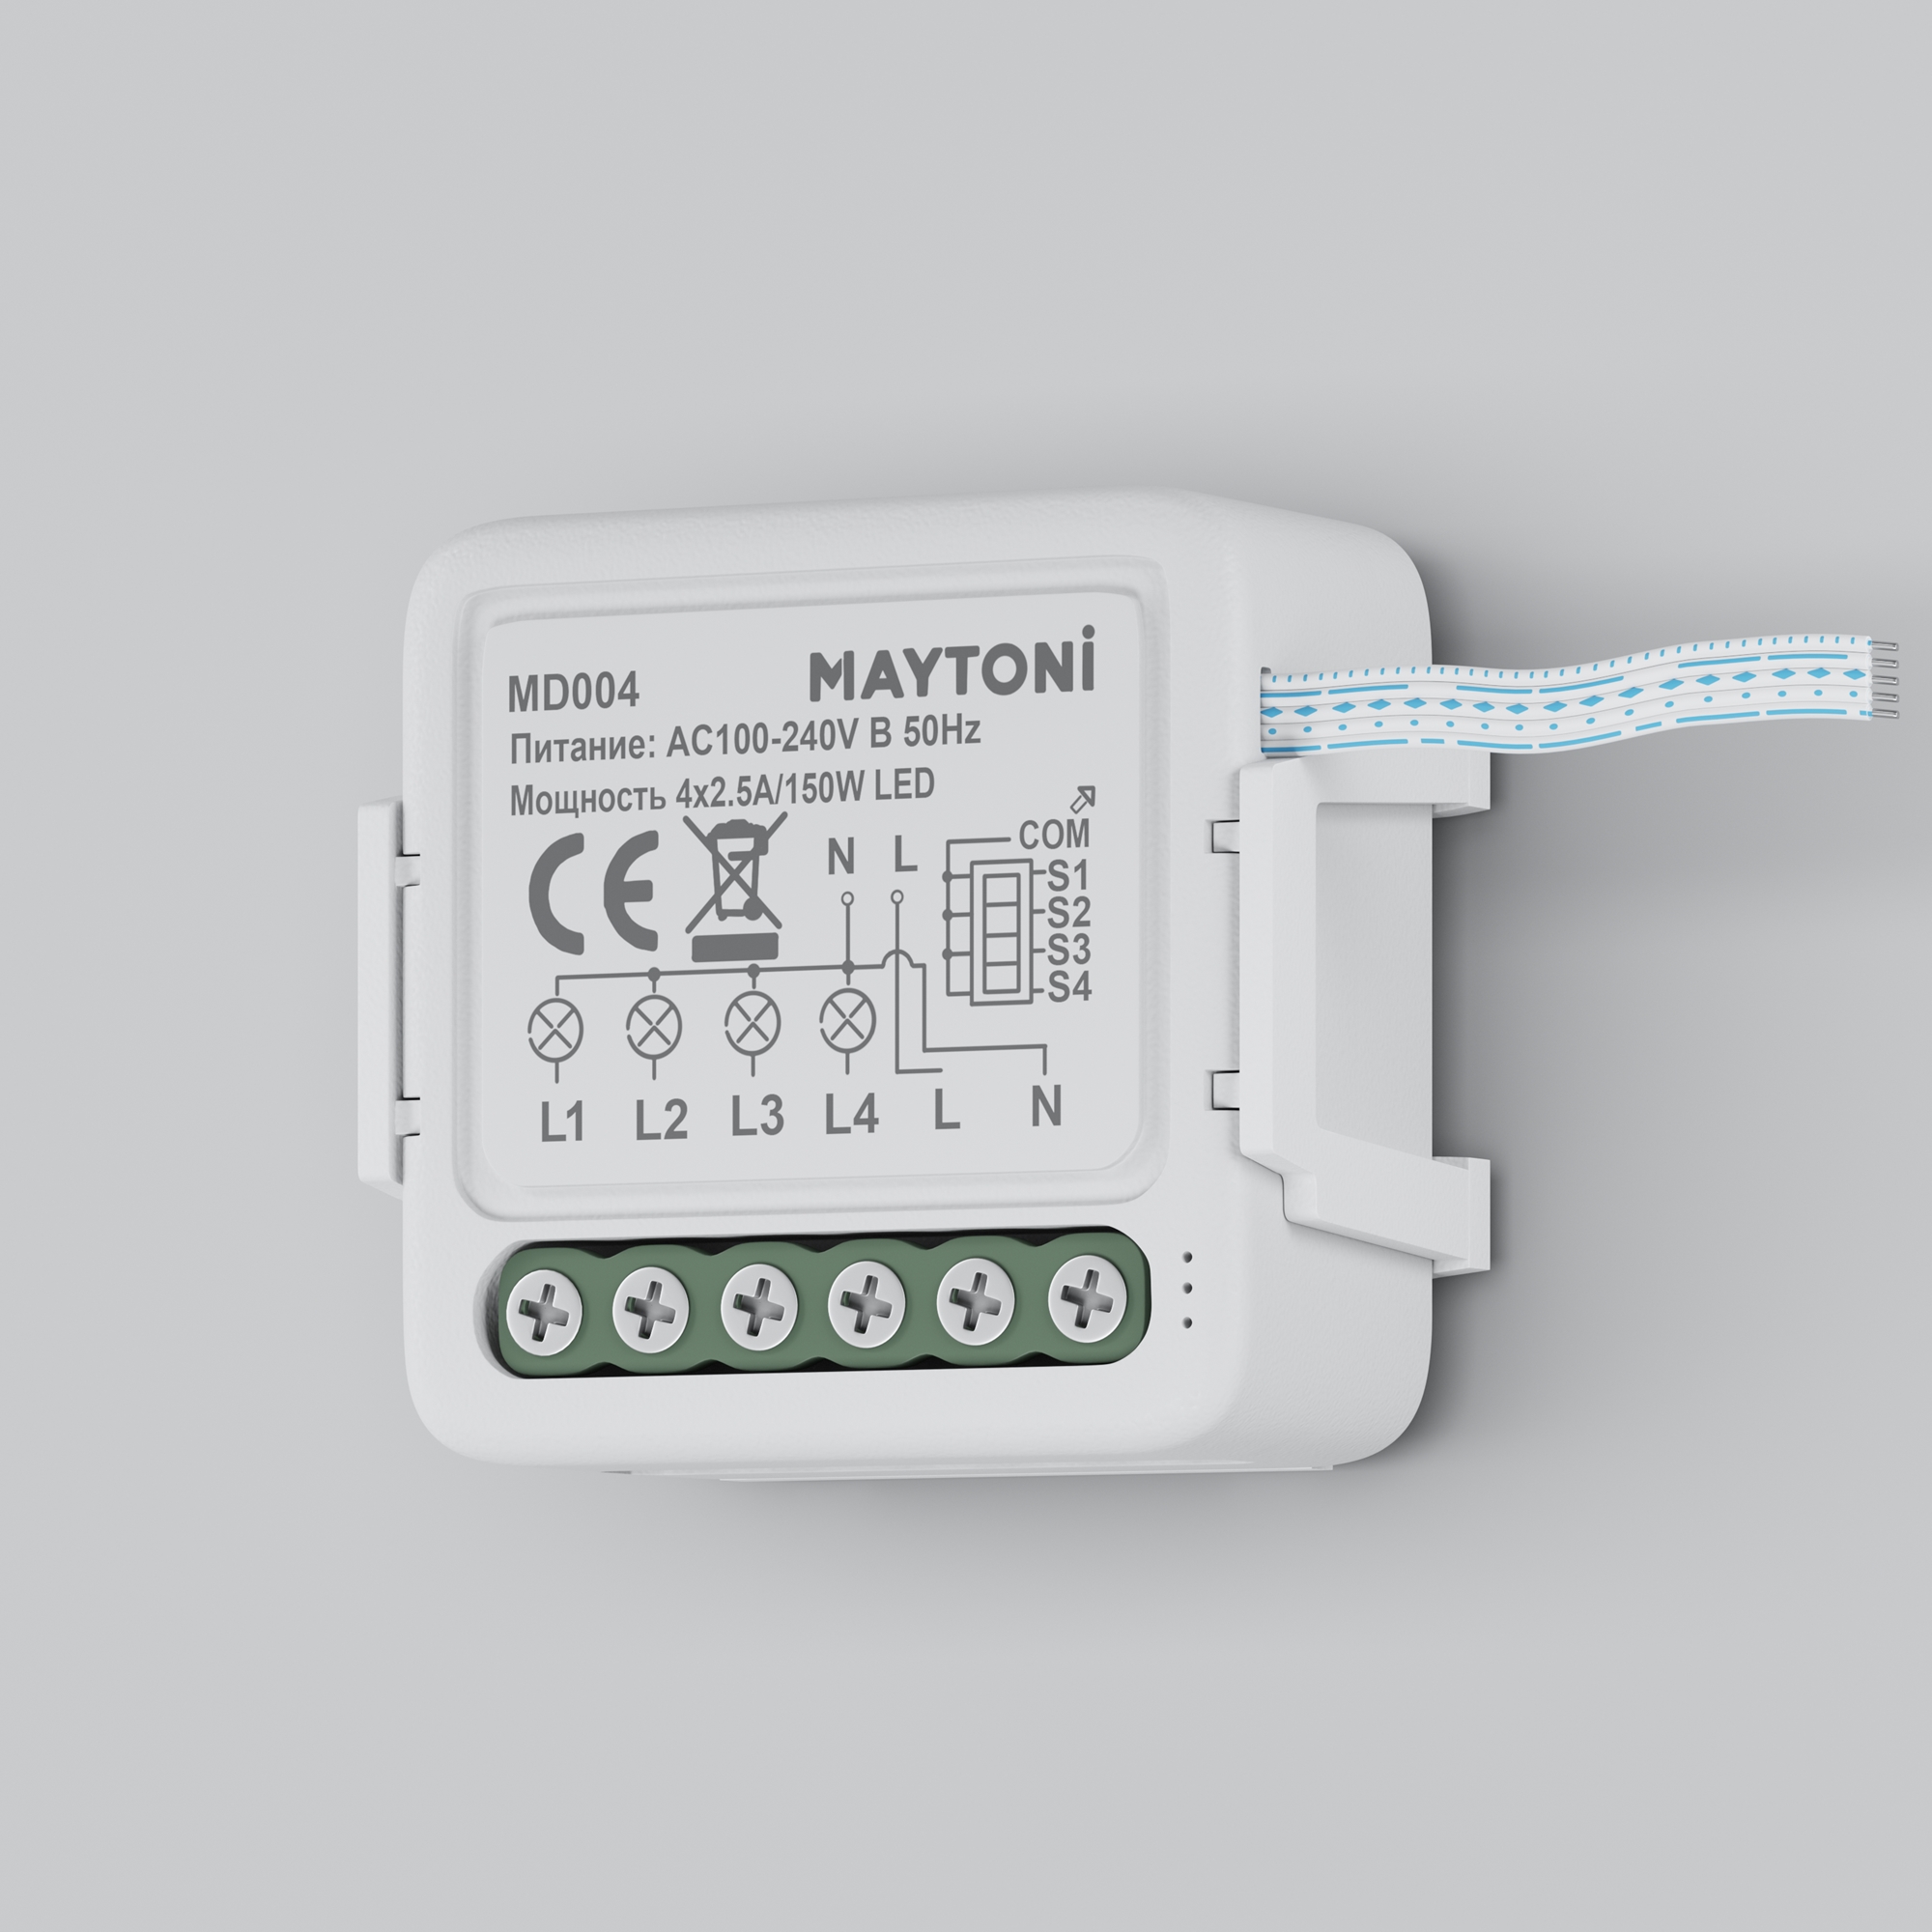 Реле Wi-Fi Maytoni MD004, цвет белый - фото 4